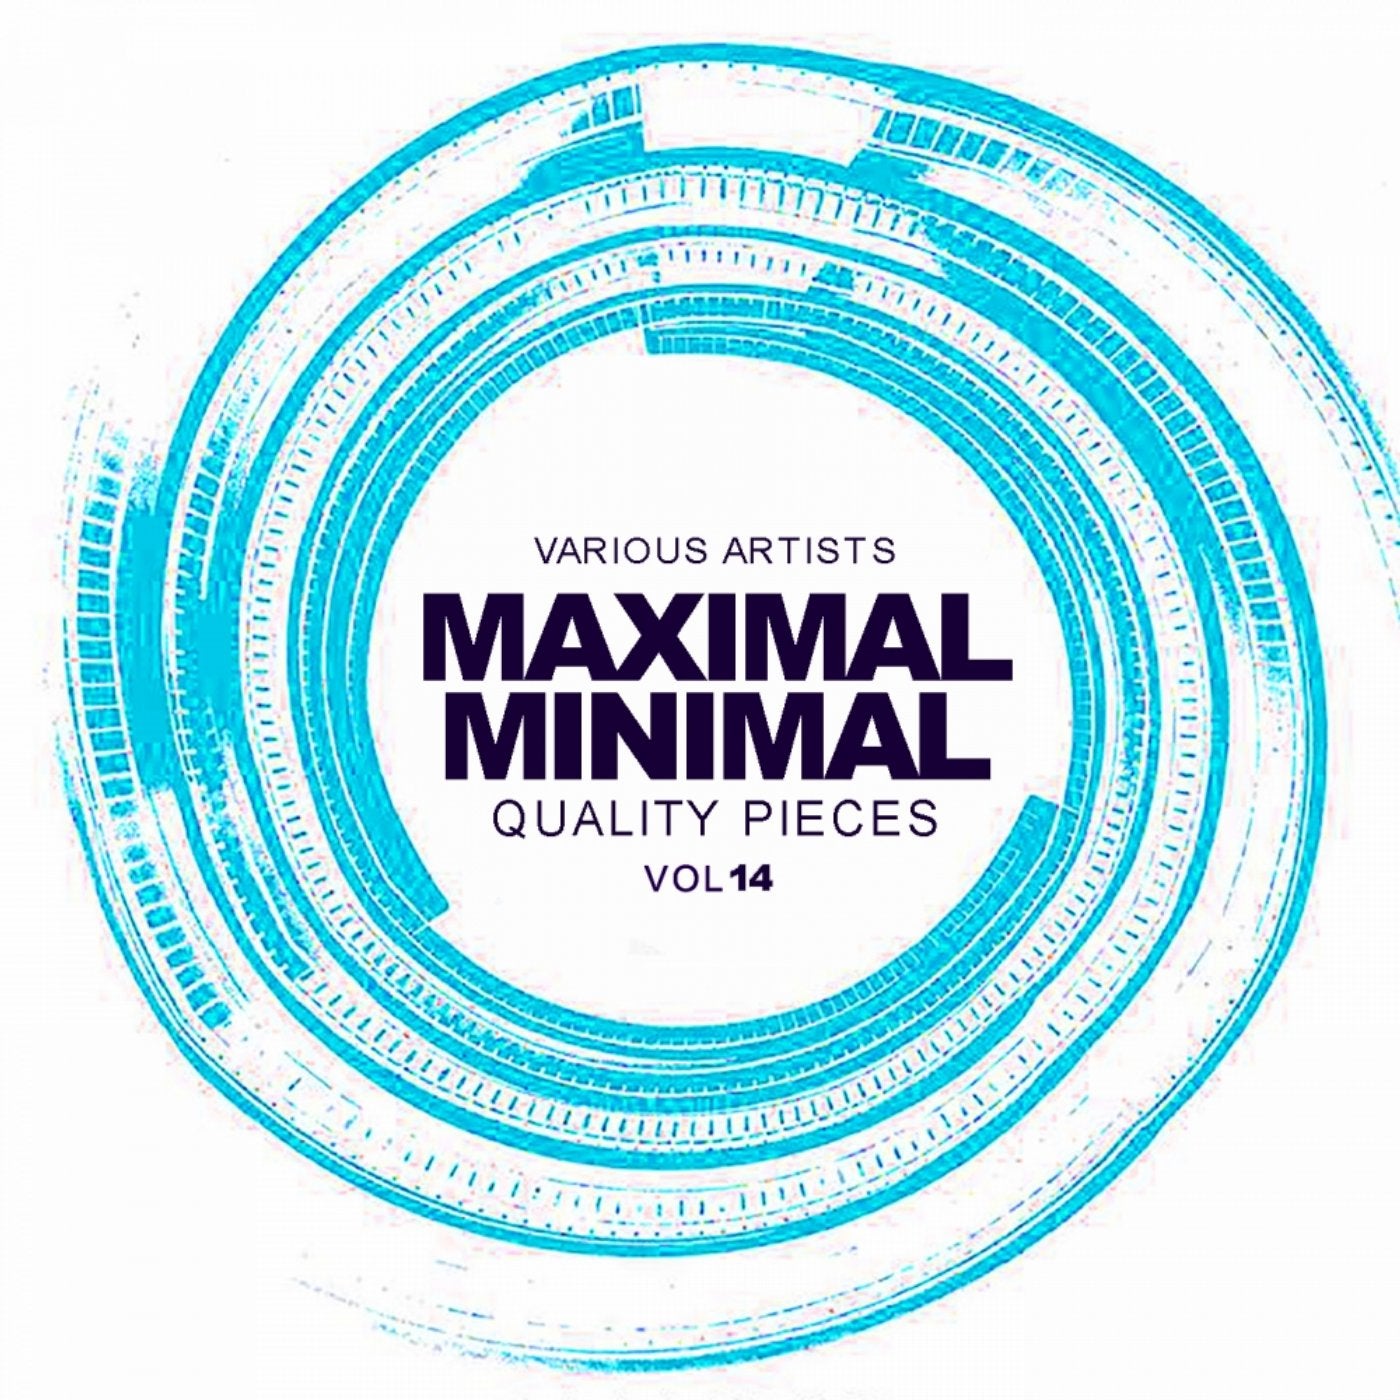 Maximal Minimal, Vol.14: Quality Pieces